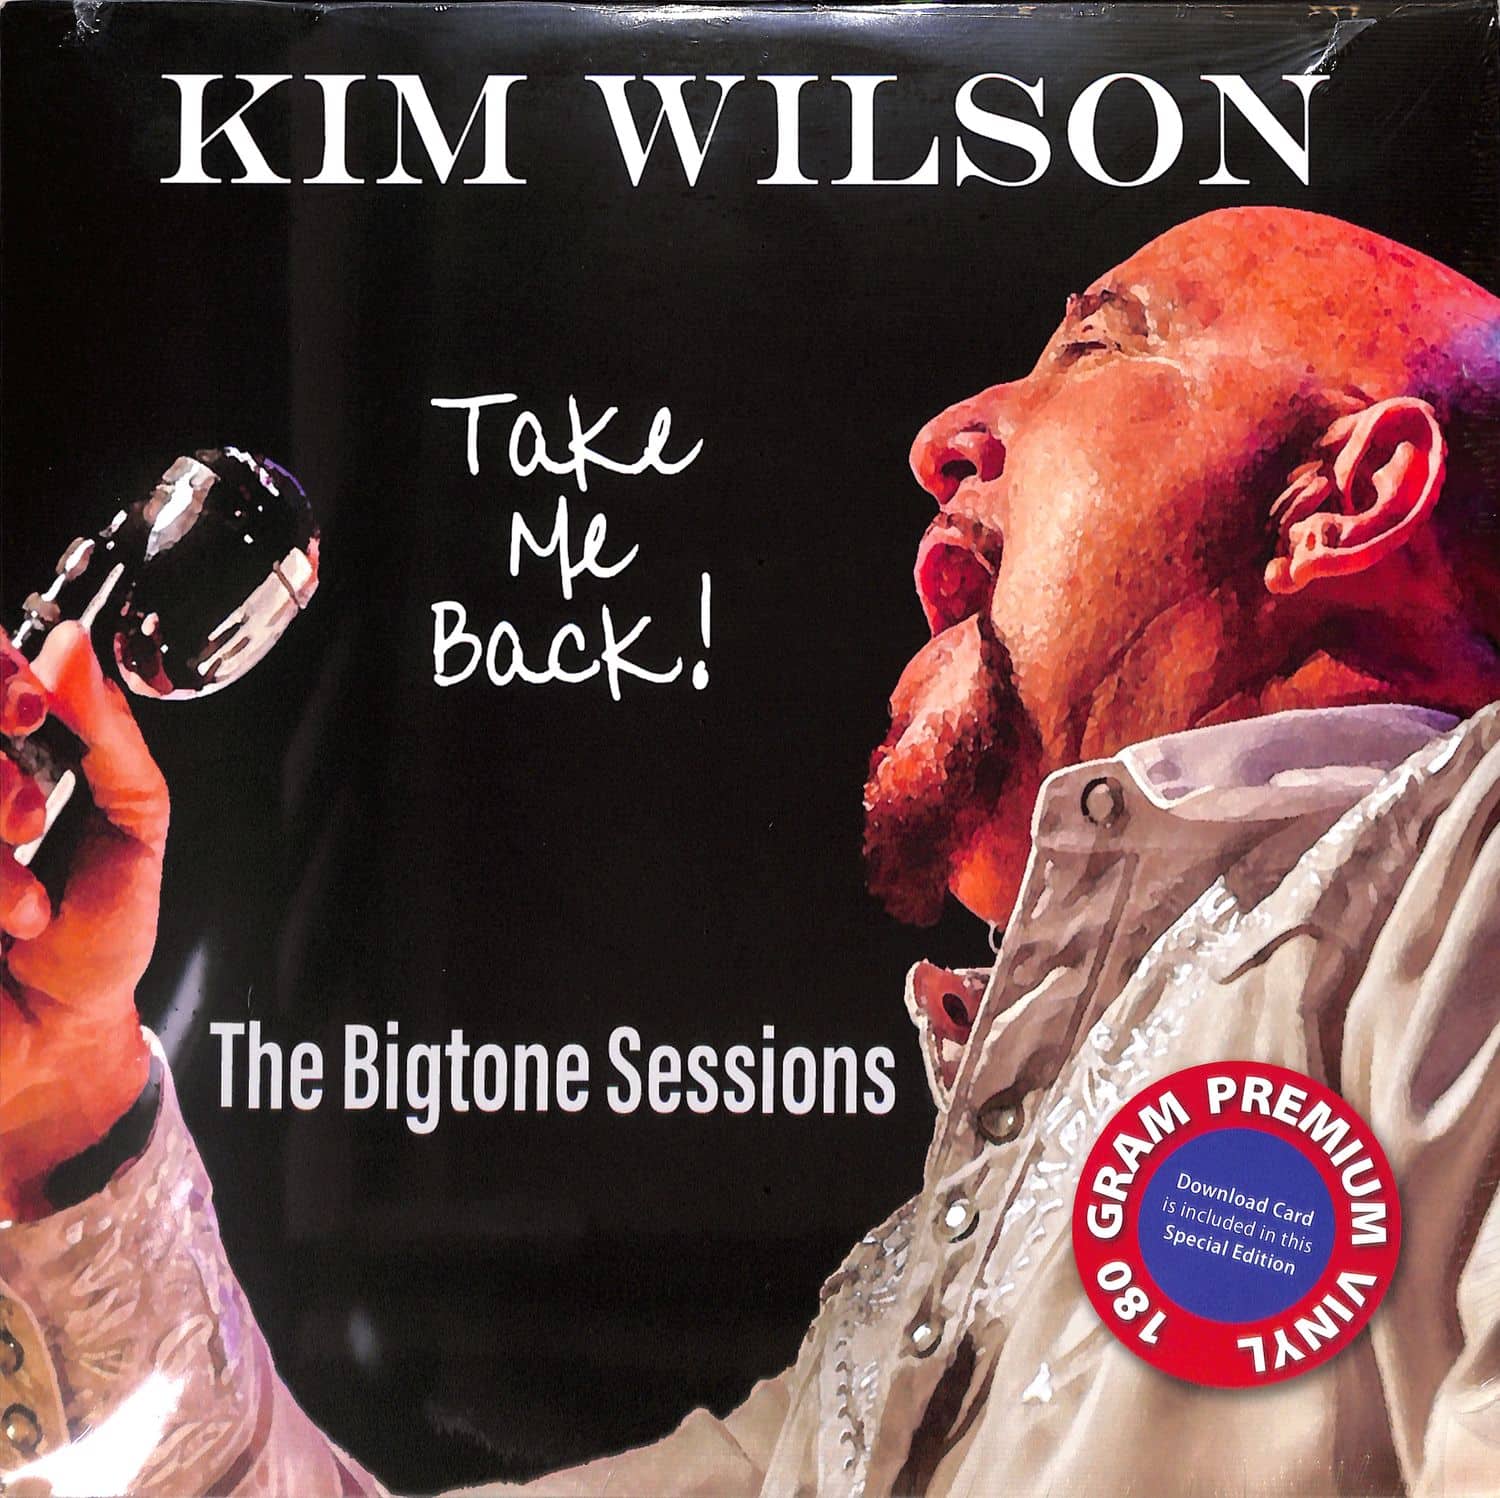 Kim Wilson - TAKE ME BACK! THE BIGTONE SESSIONS 